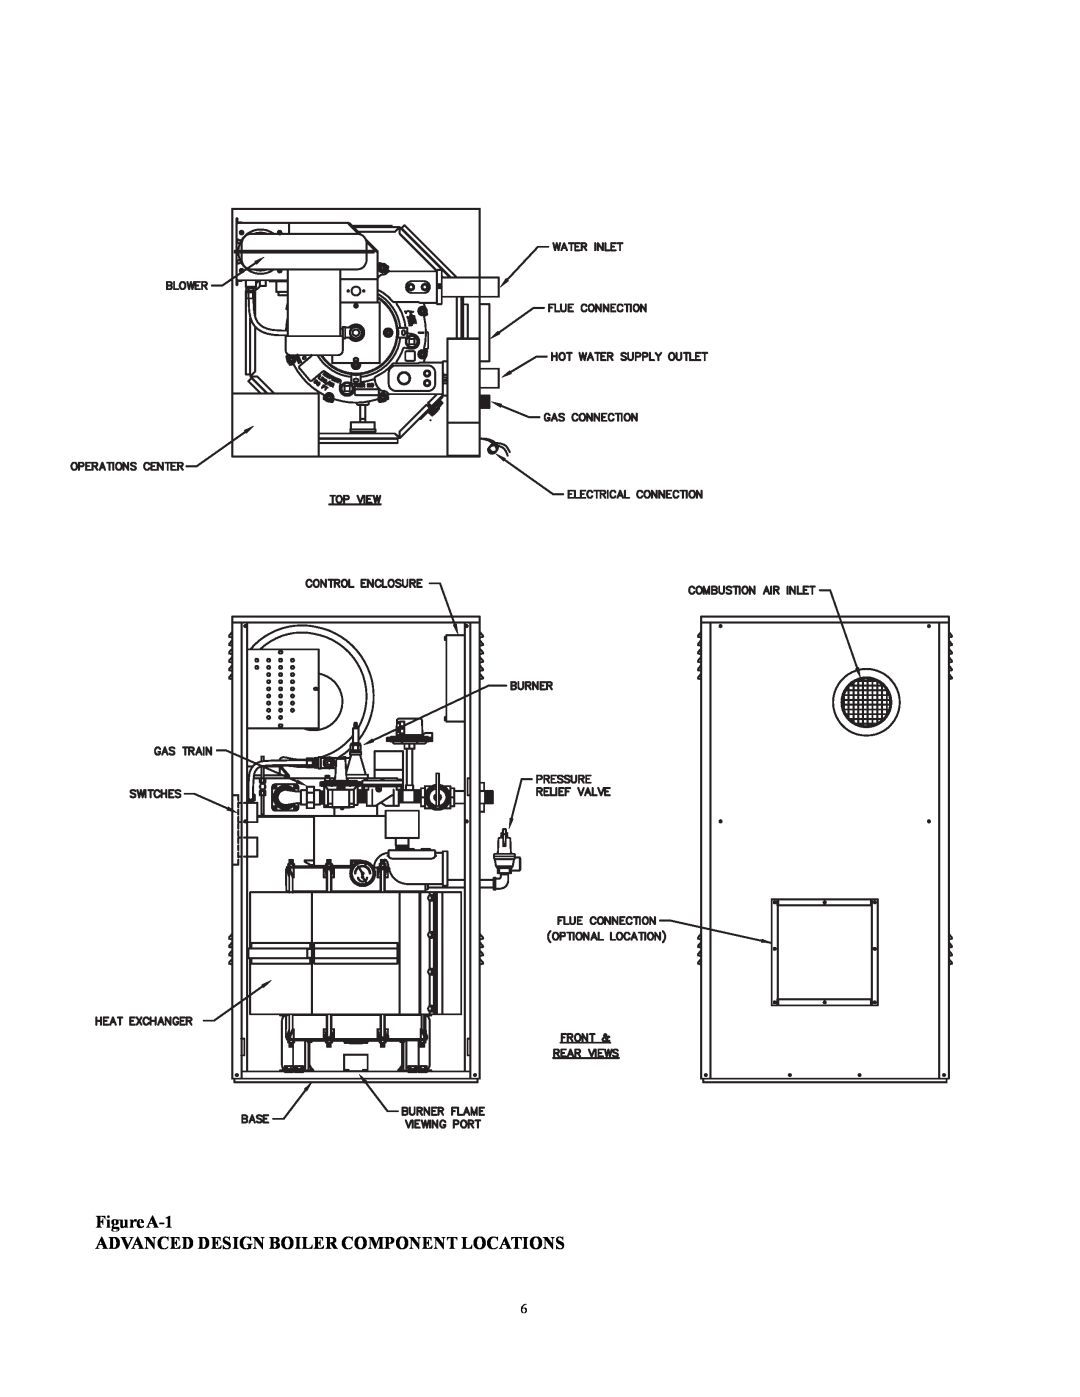 Raypak 500, 750, 1000 installation instructions Figure A-1, Advanced Design Boiler Component Locations 